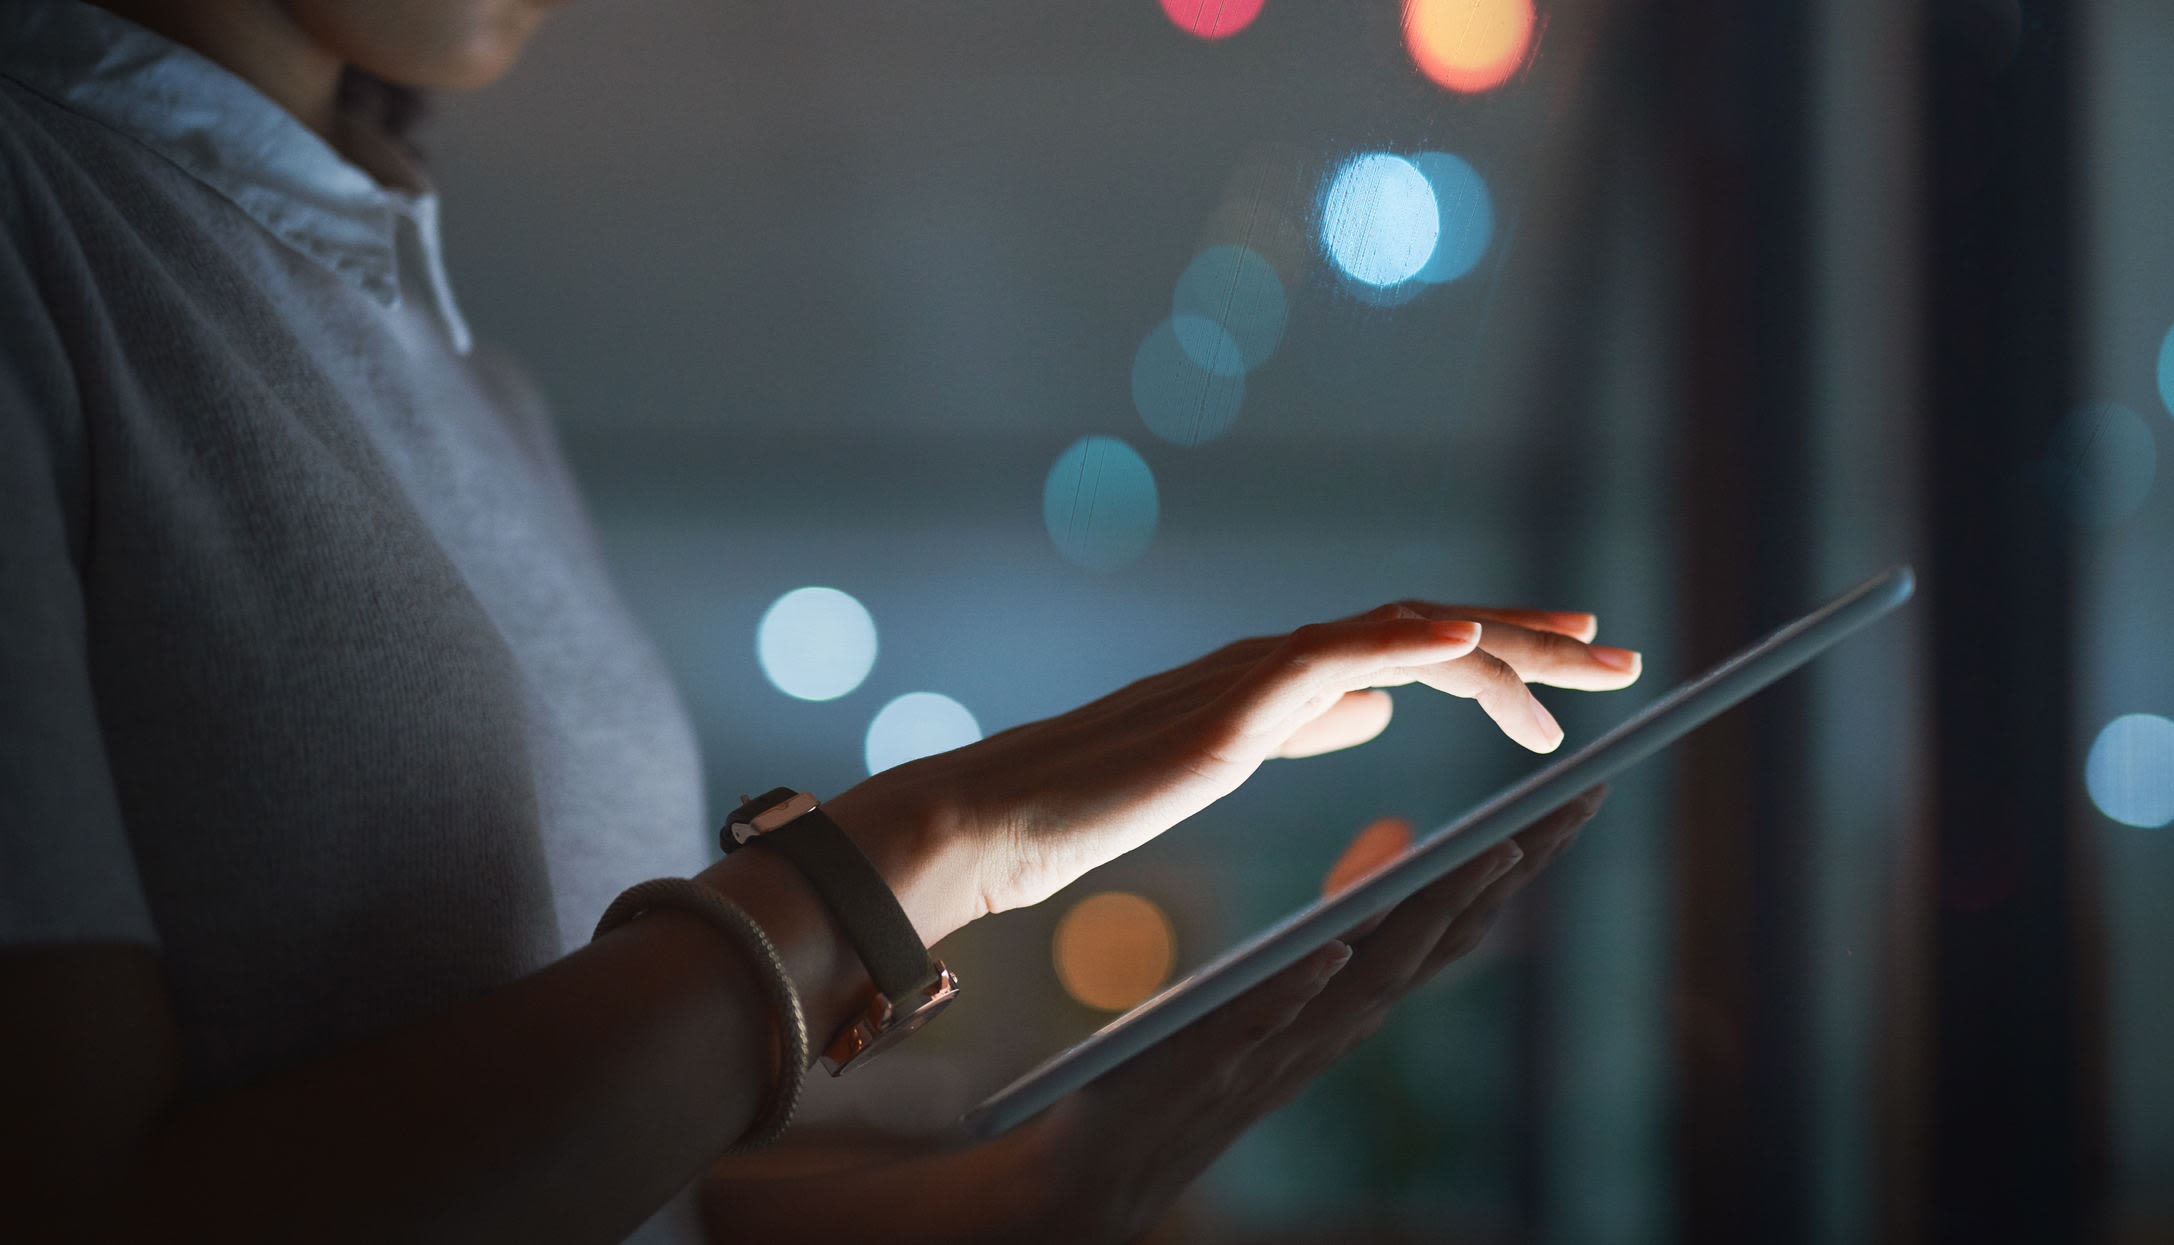 Tablet, Frau, Nachts, Touchbildschirm
Urheber: Getty Images / Jay Yuno